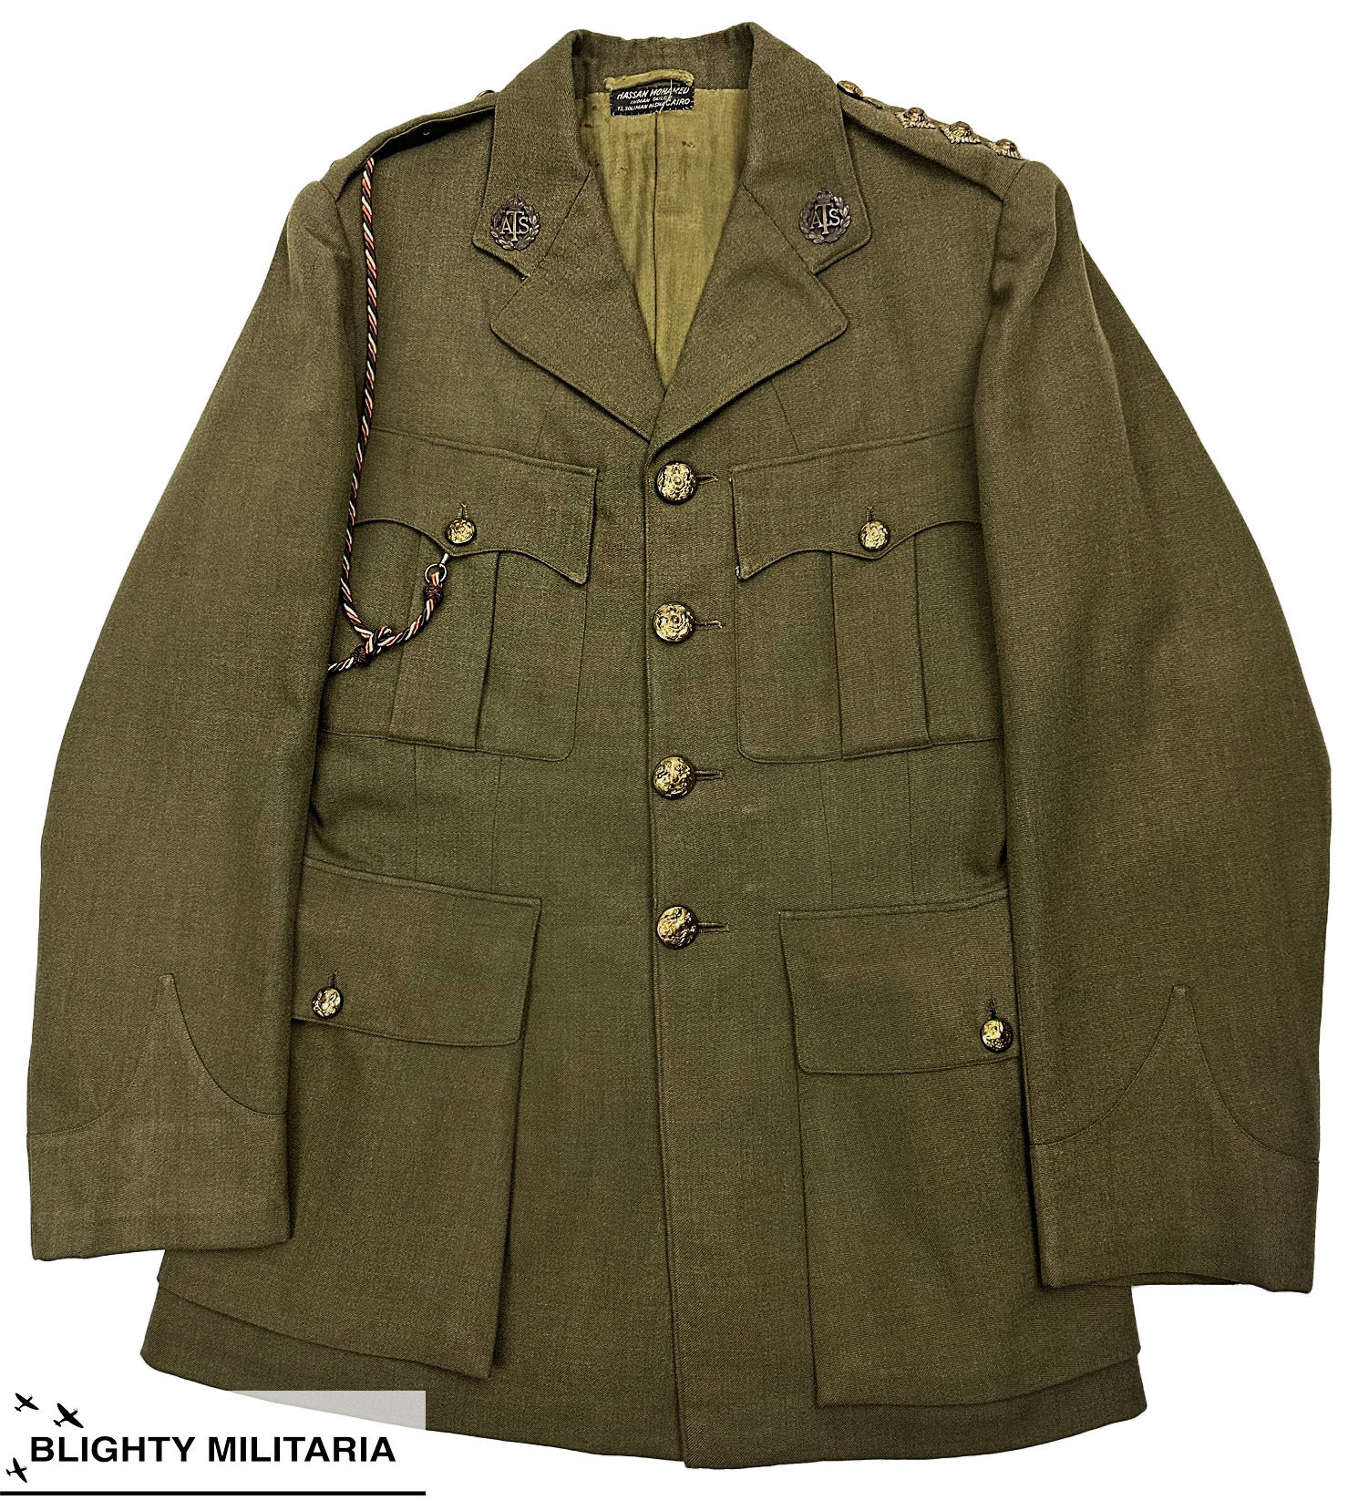 Original WW2 ATS Officer's Service Dress Tunic - Large Size